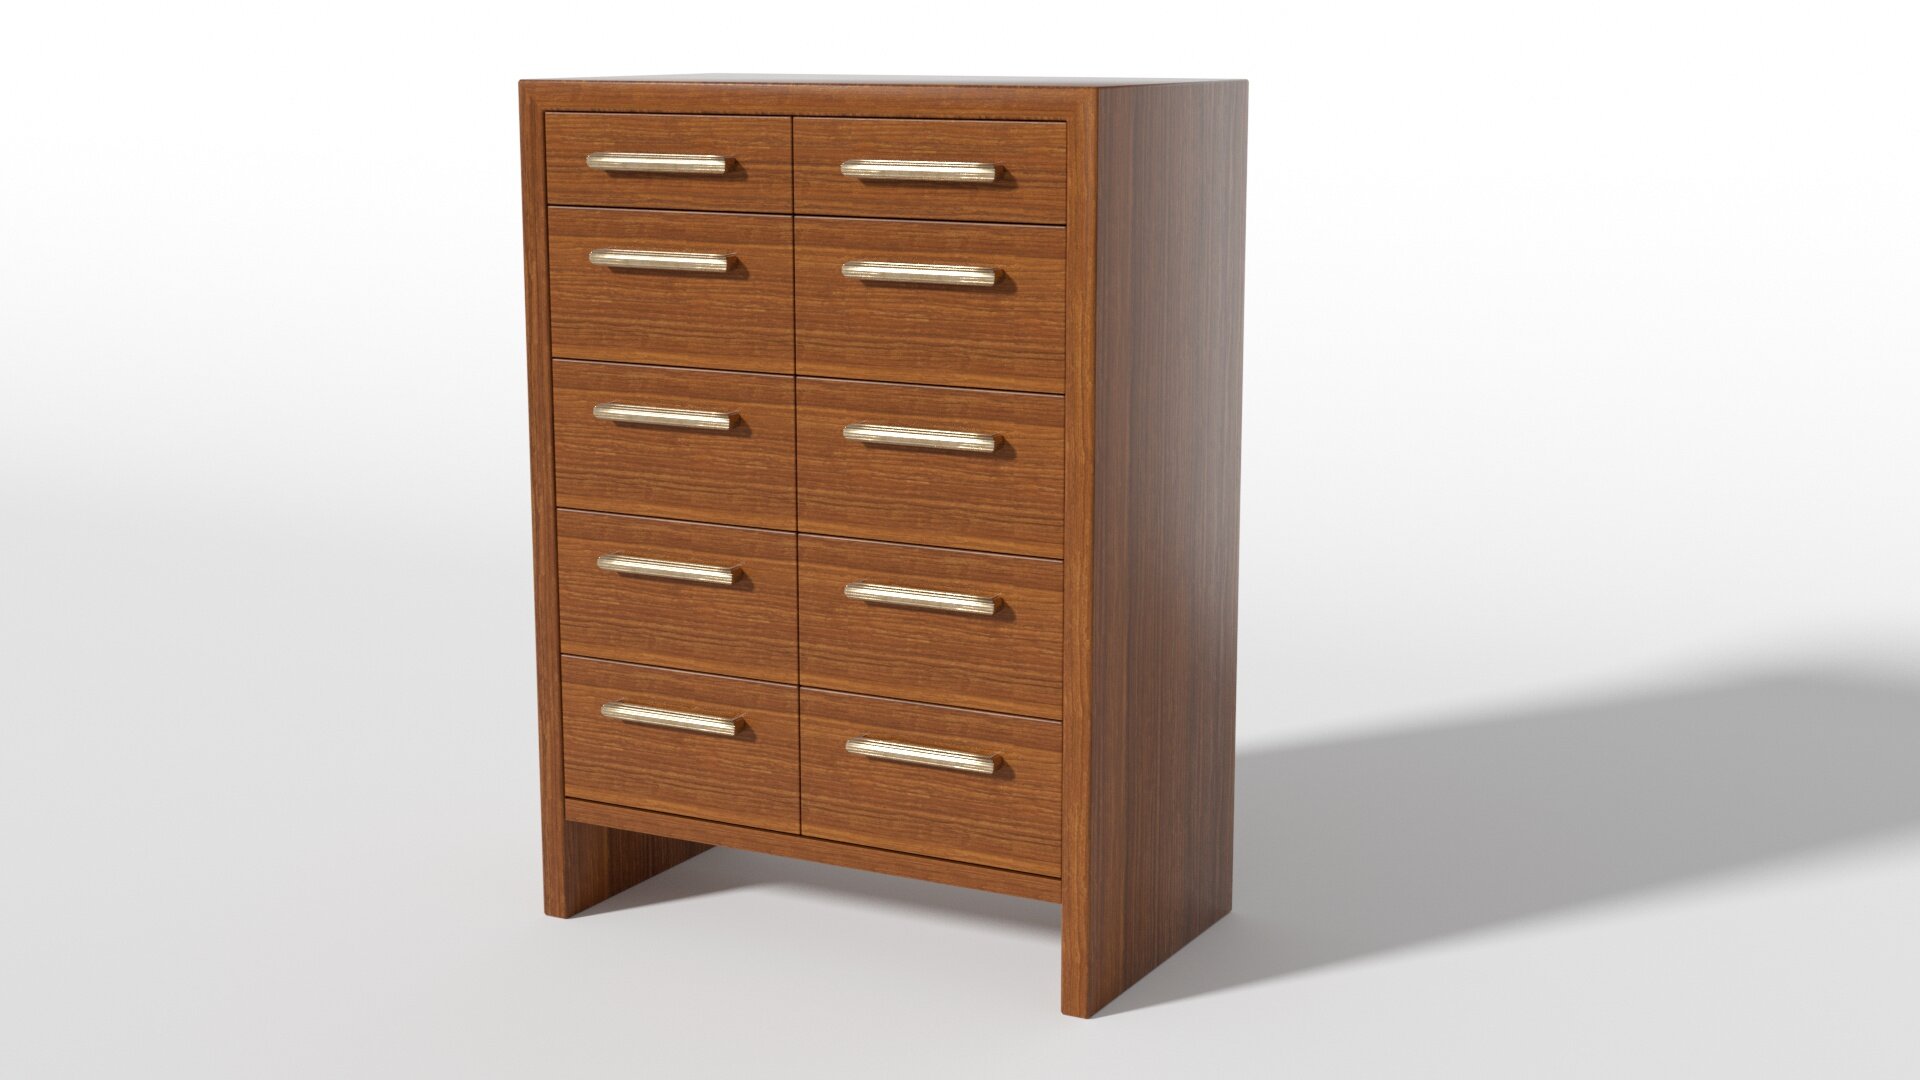 EK_Reedy_Furniture_Double_Drawer_Bureau_Solid_Oak_Luxury_Modern_Handmade_Furniture.jpg